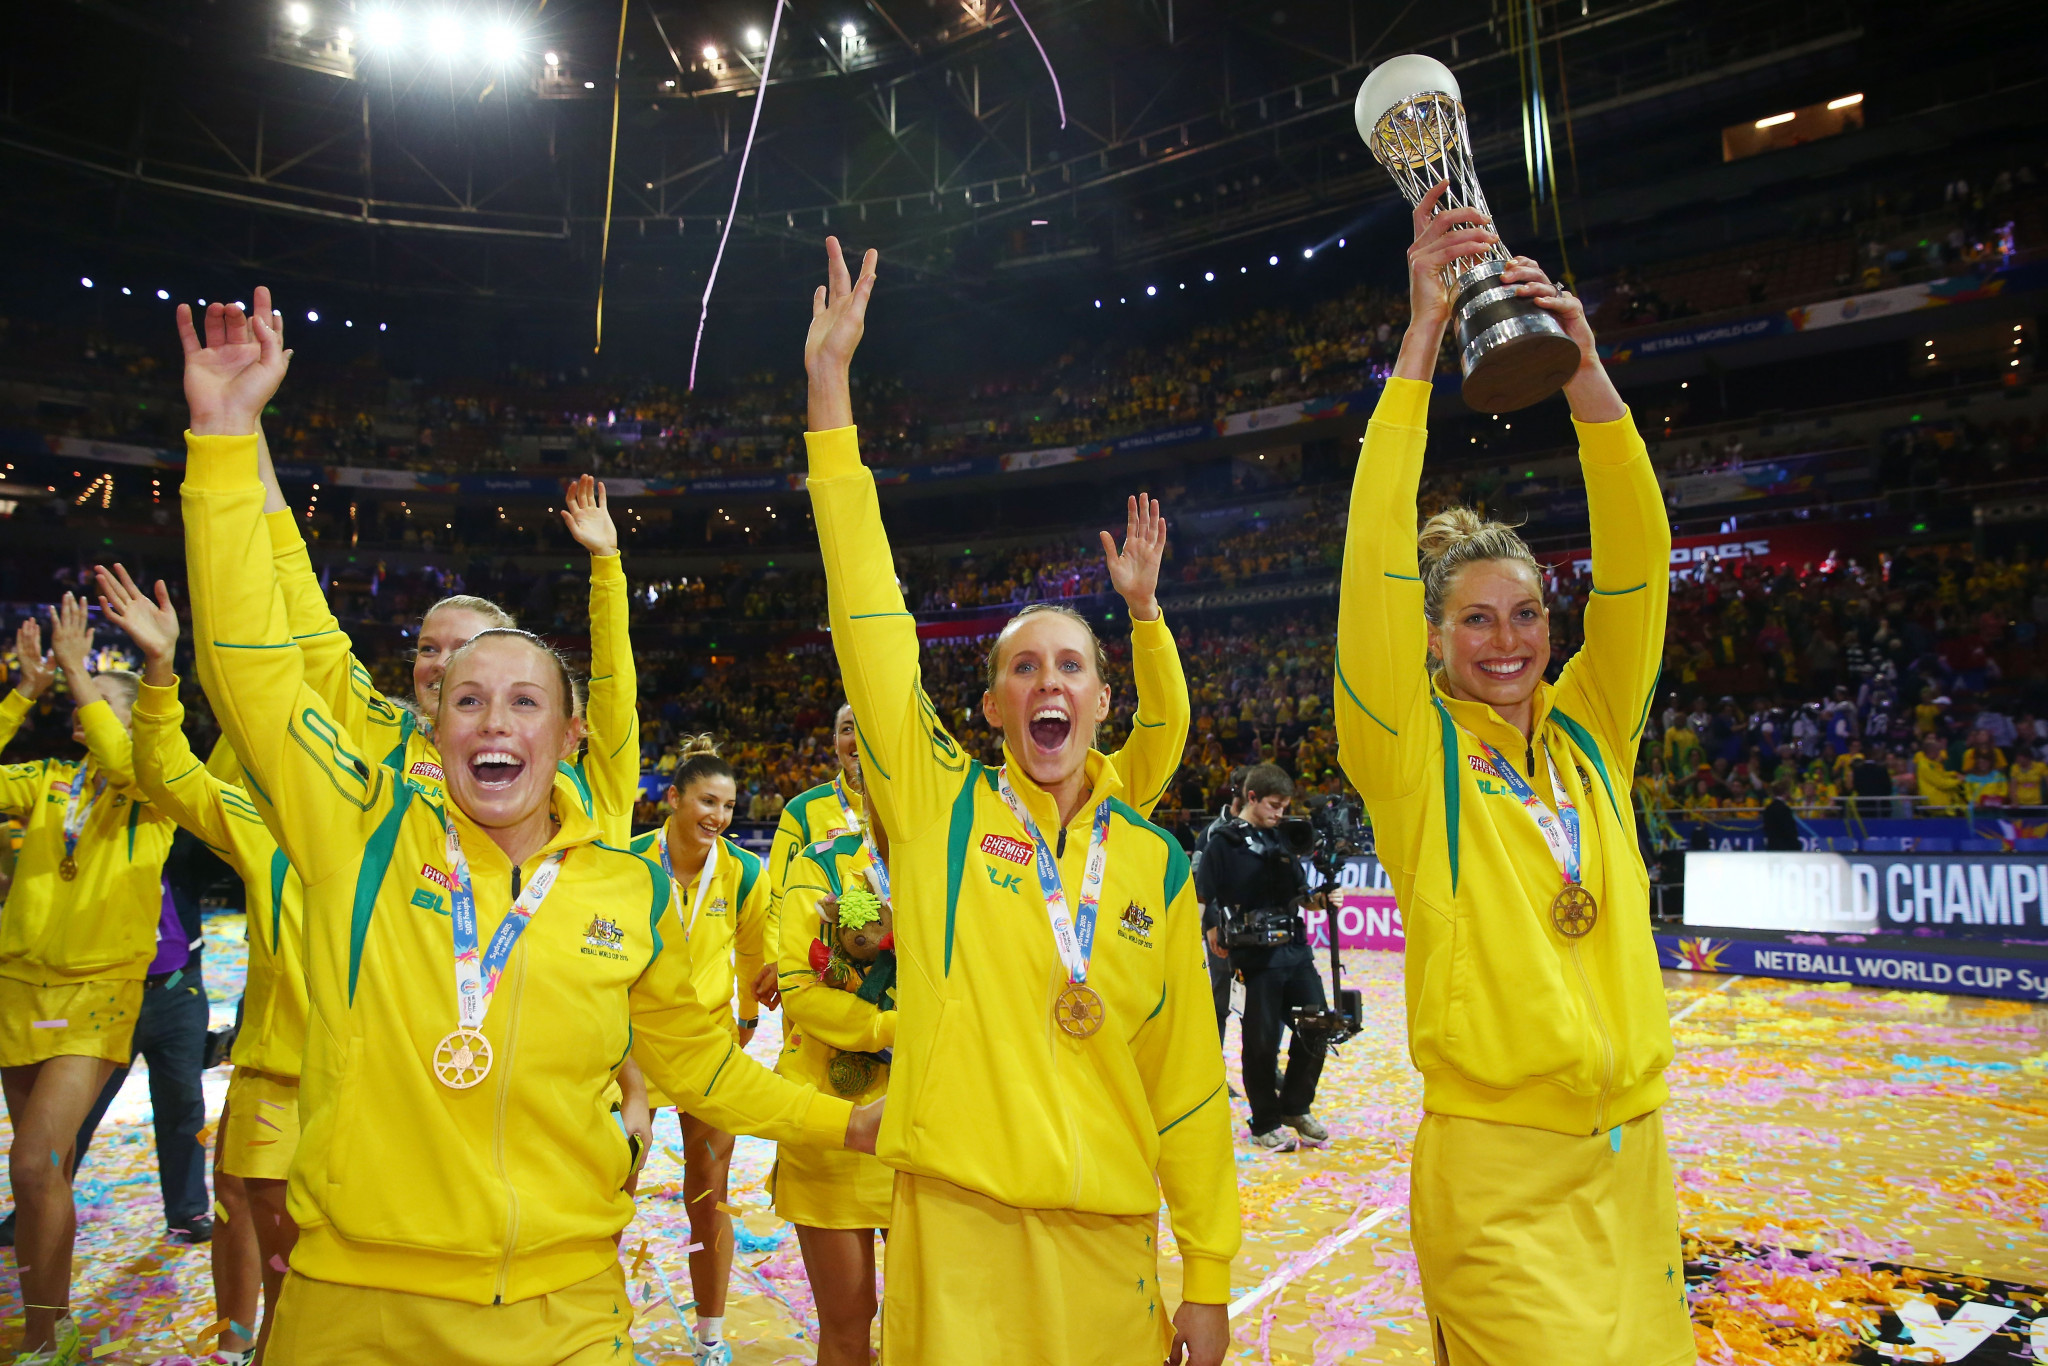 Australia submits bid to host 2027 Netball World Cup